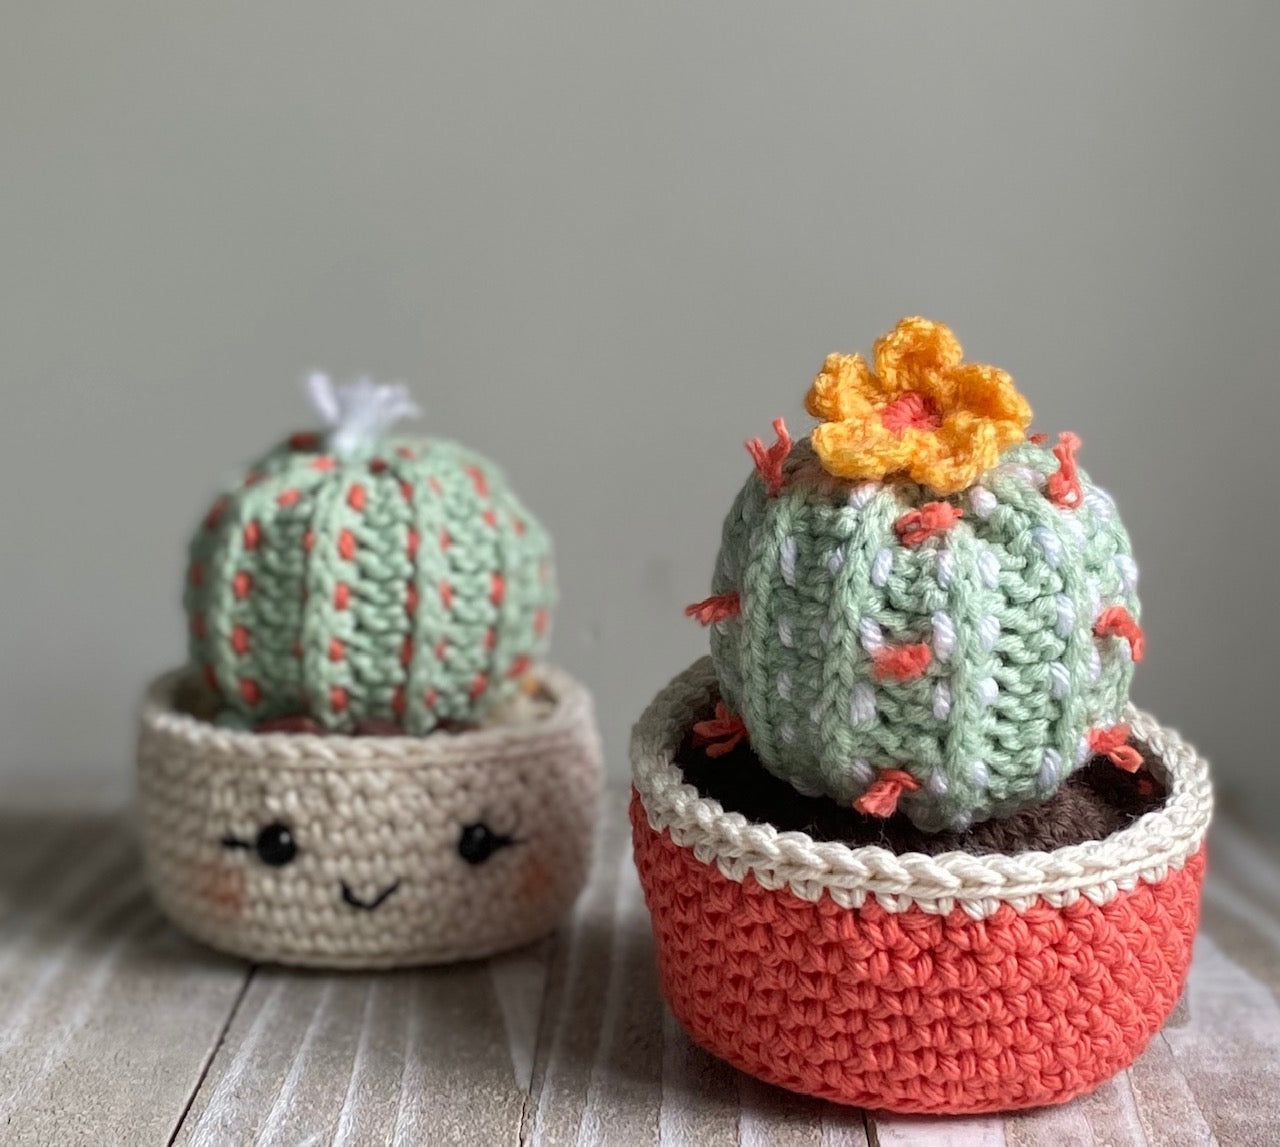 Barrel Cactus Crochet Pattern